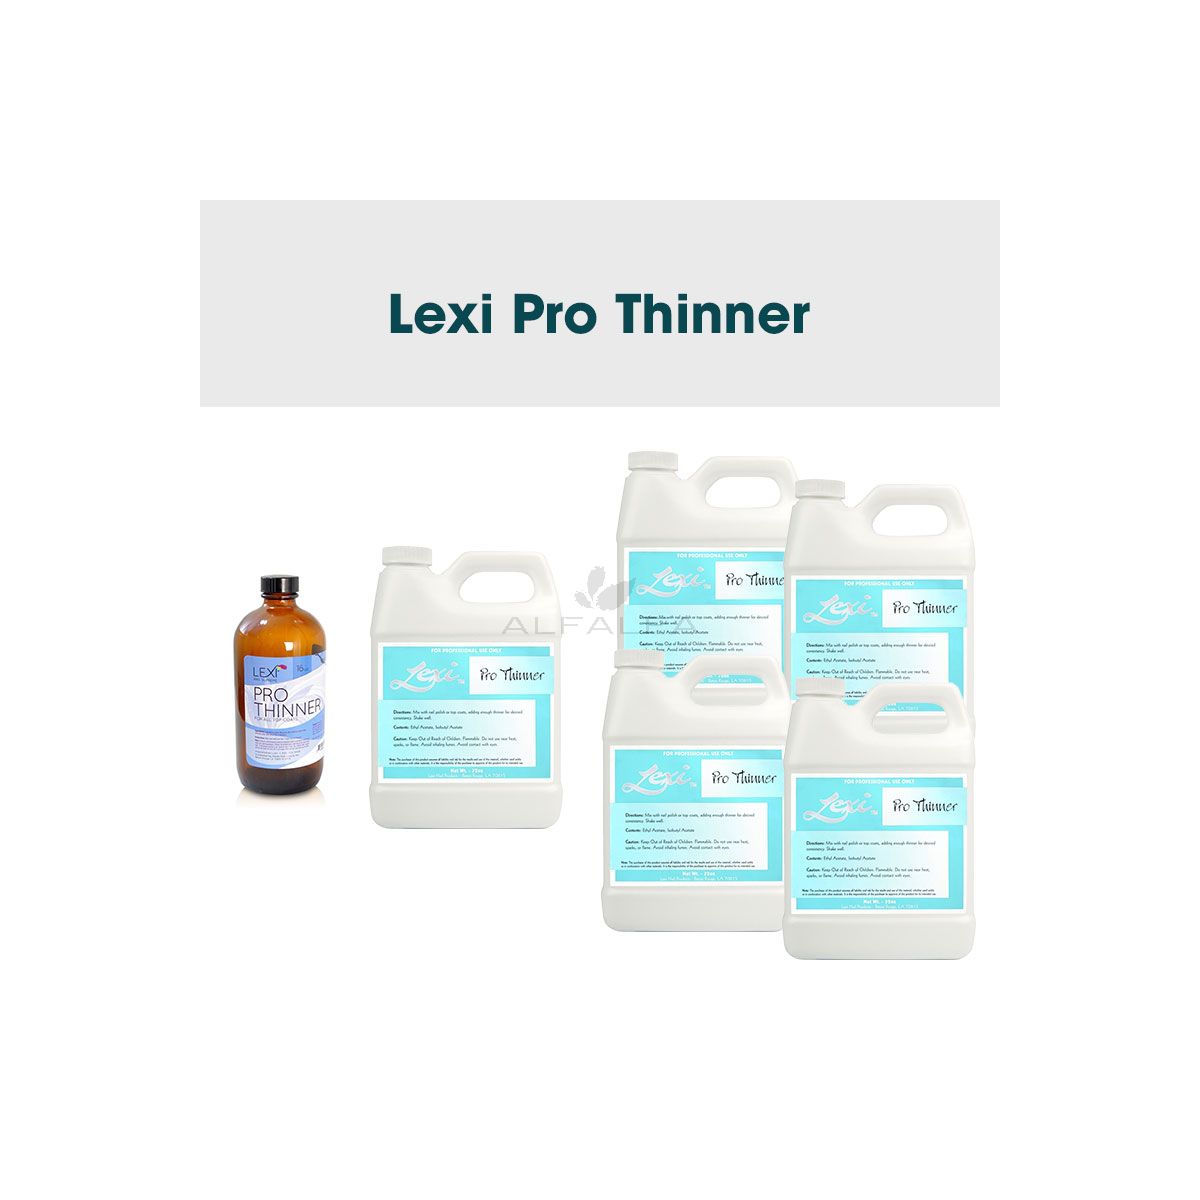 Lexi Pro Thinner